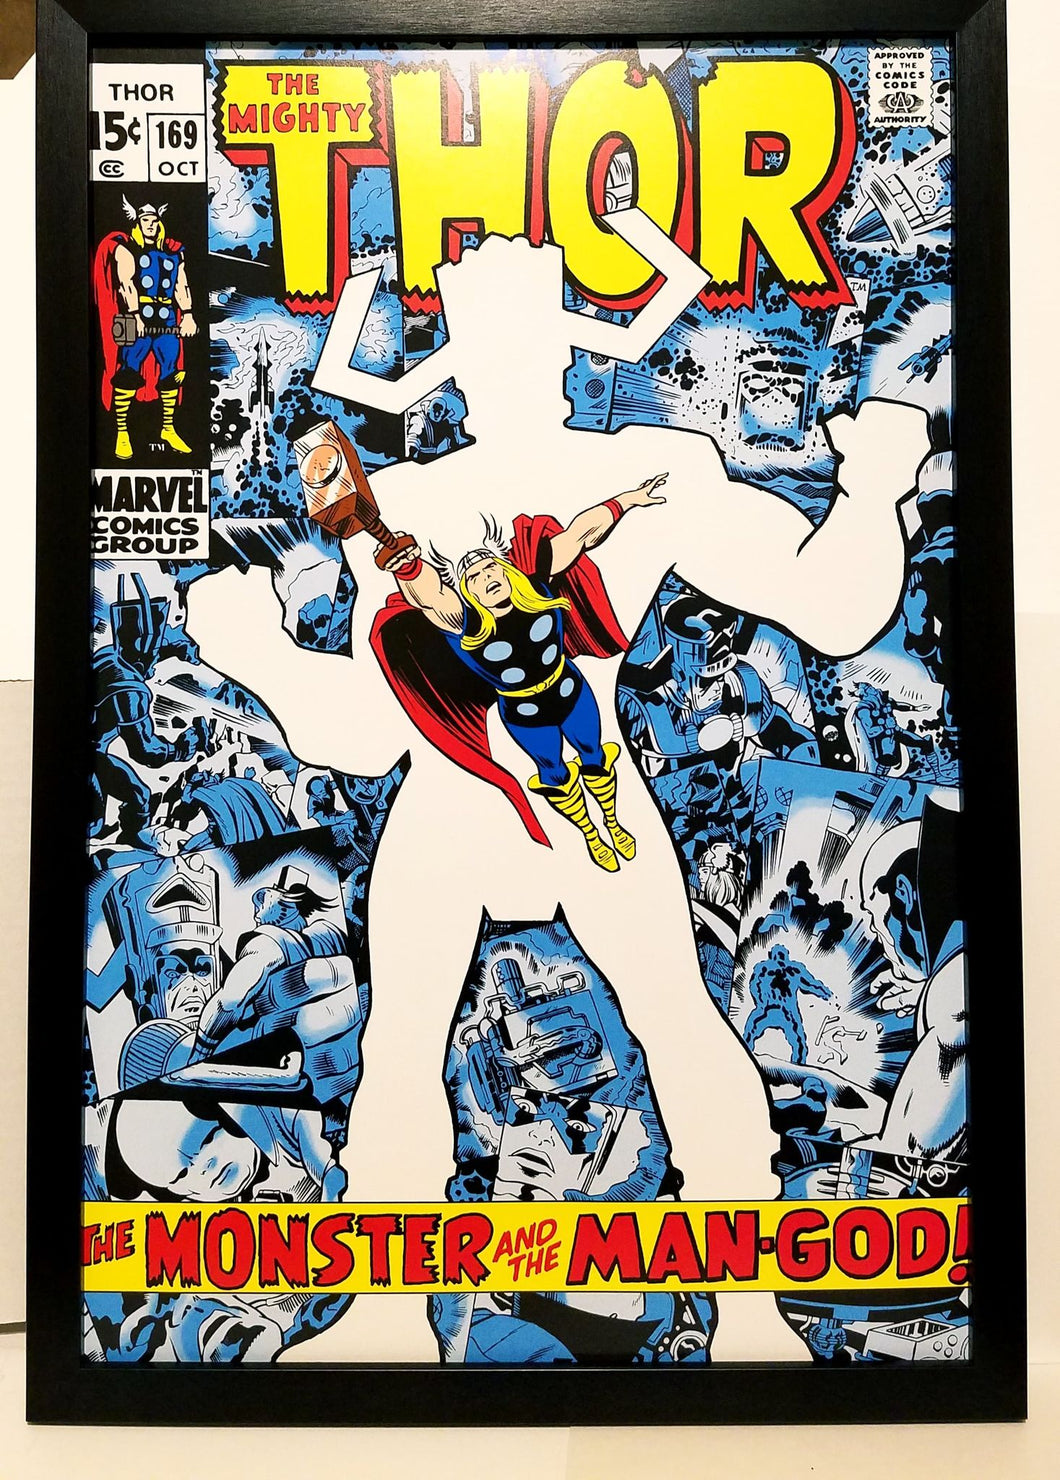 Thor #169 Galactus by Jack Kirby 12x18 FRAMED Marvel Comics Vintage Art Print Poster